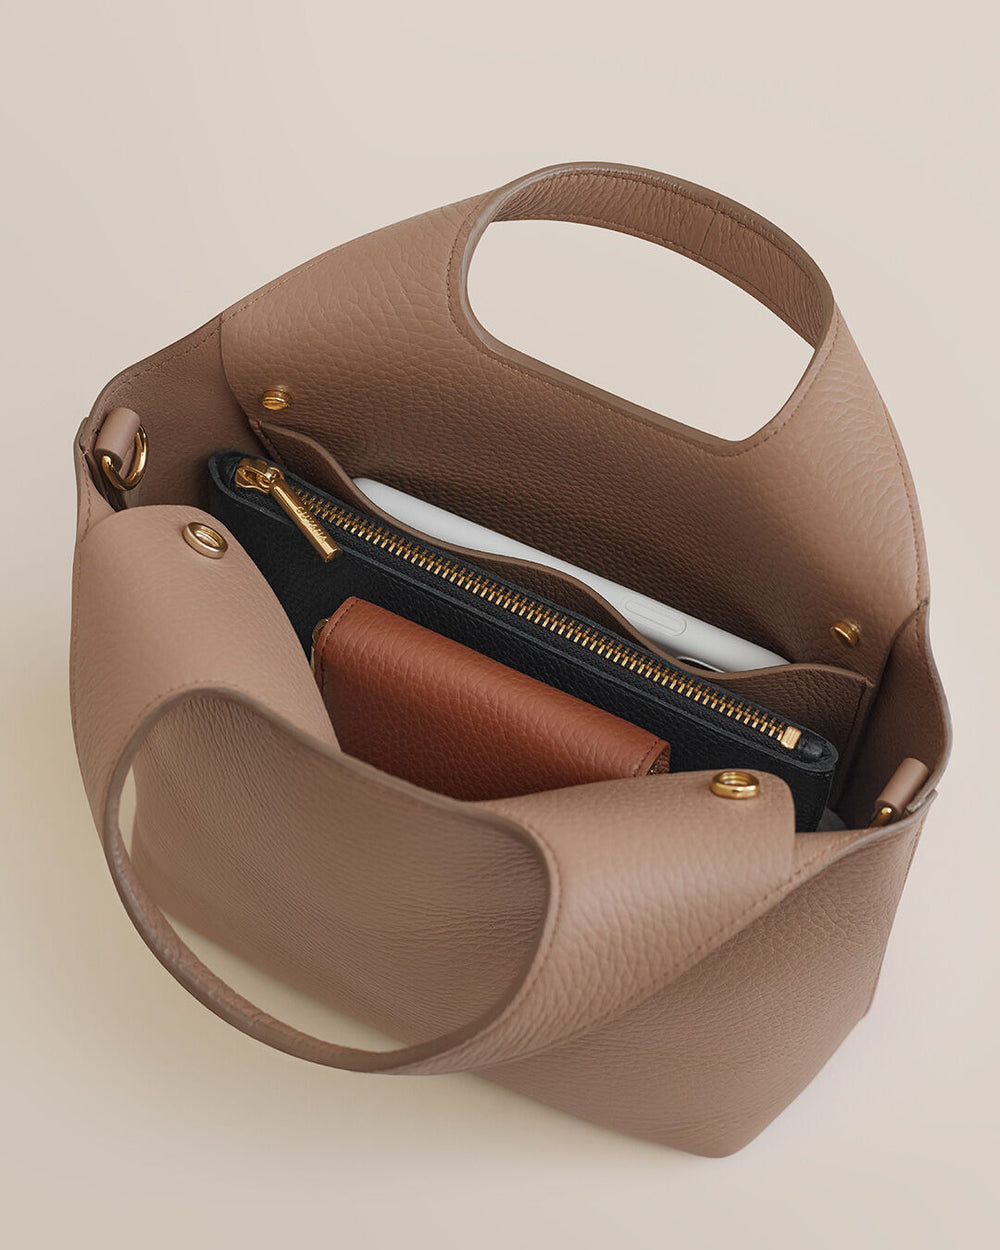 Handbag open showing contents with handles and zipper.